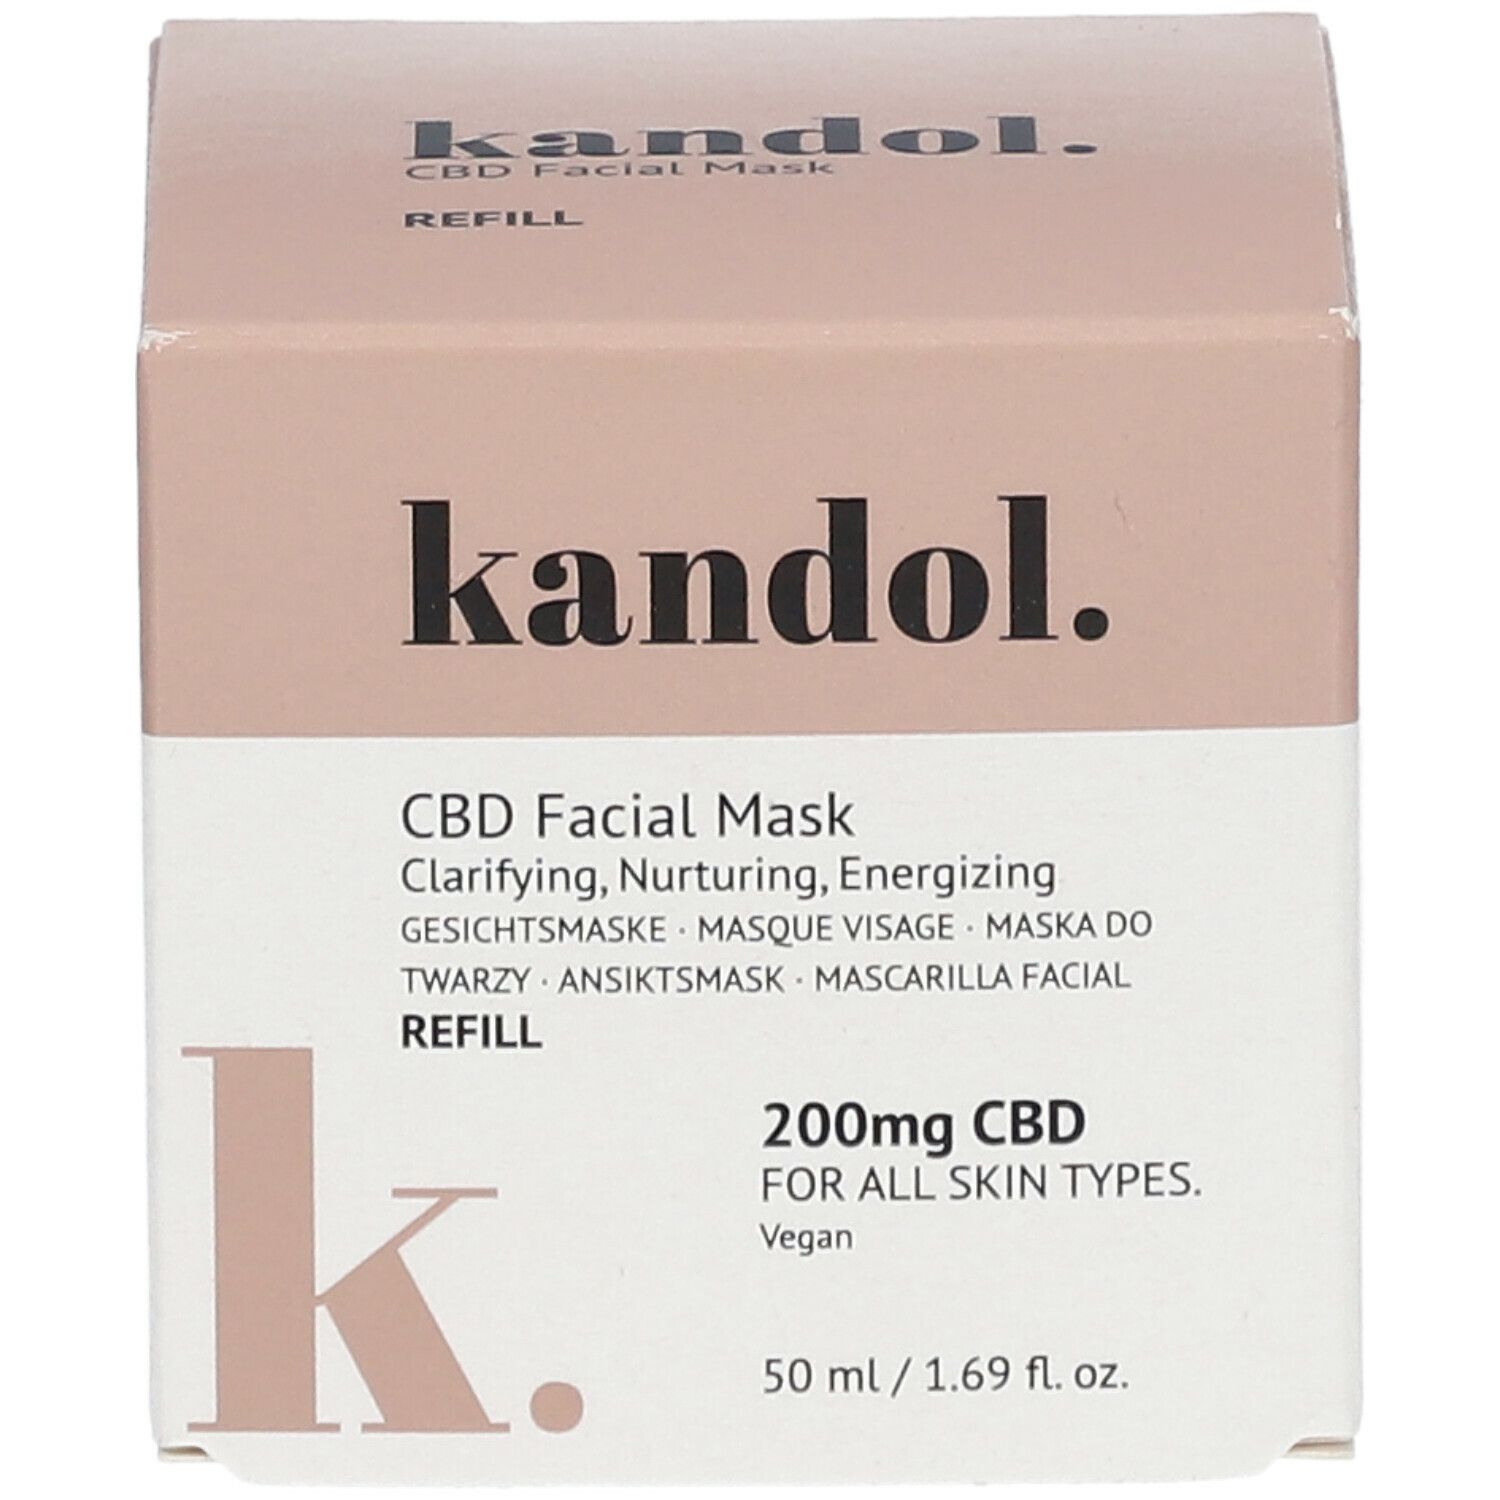 kandol. CBD Facial Mask REFILL